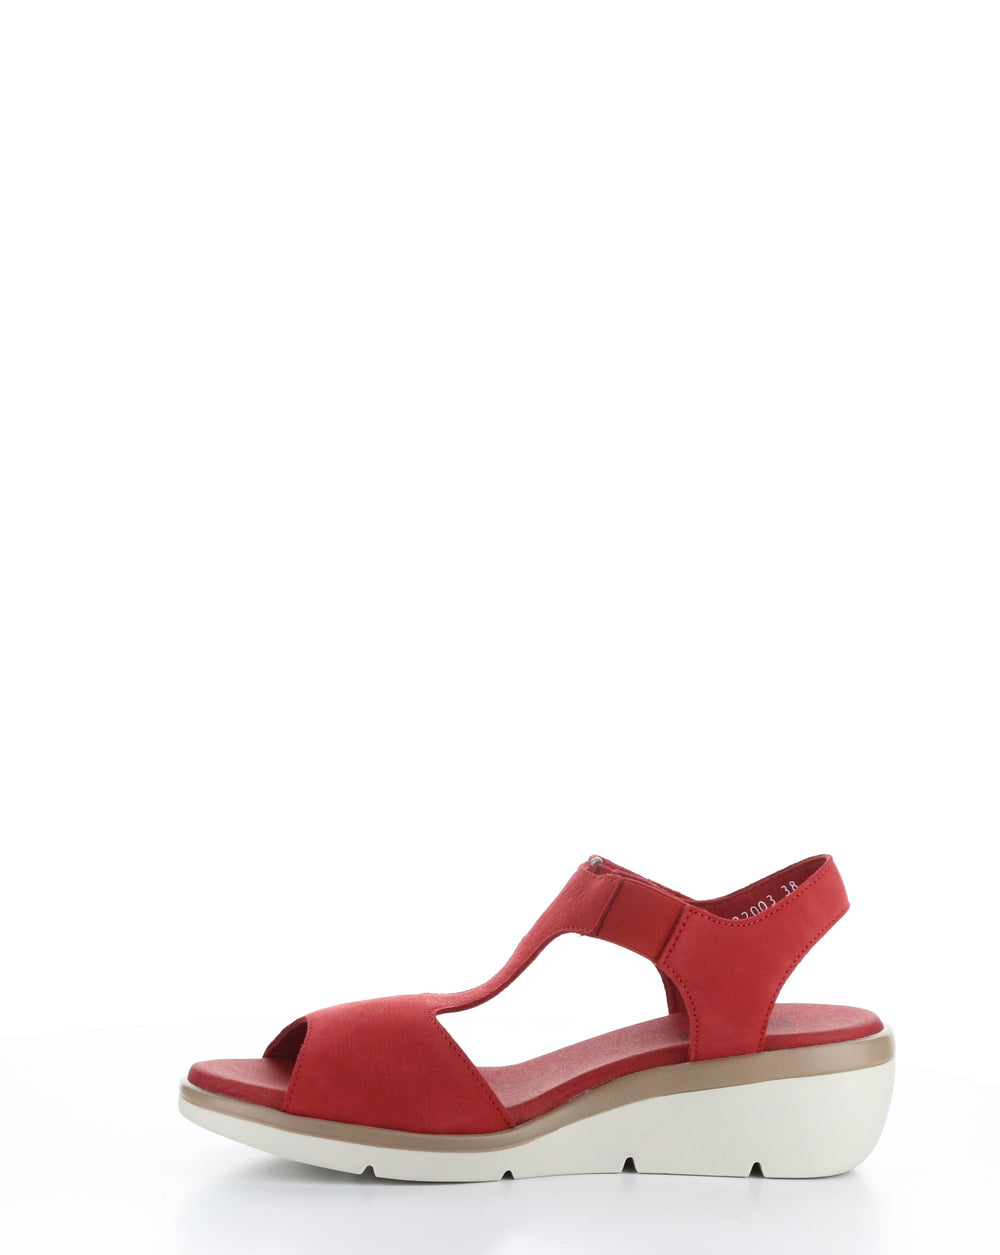 NOVA932FLY 003 LIPSTICK RED Velcro Sandals